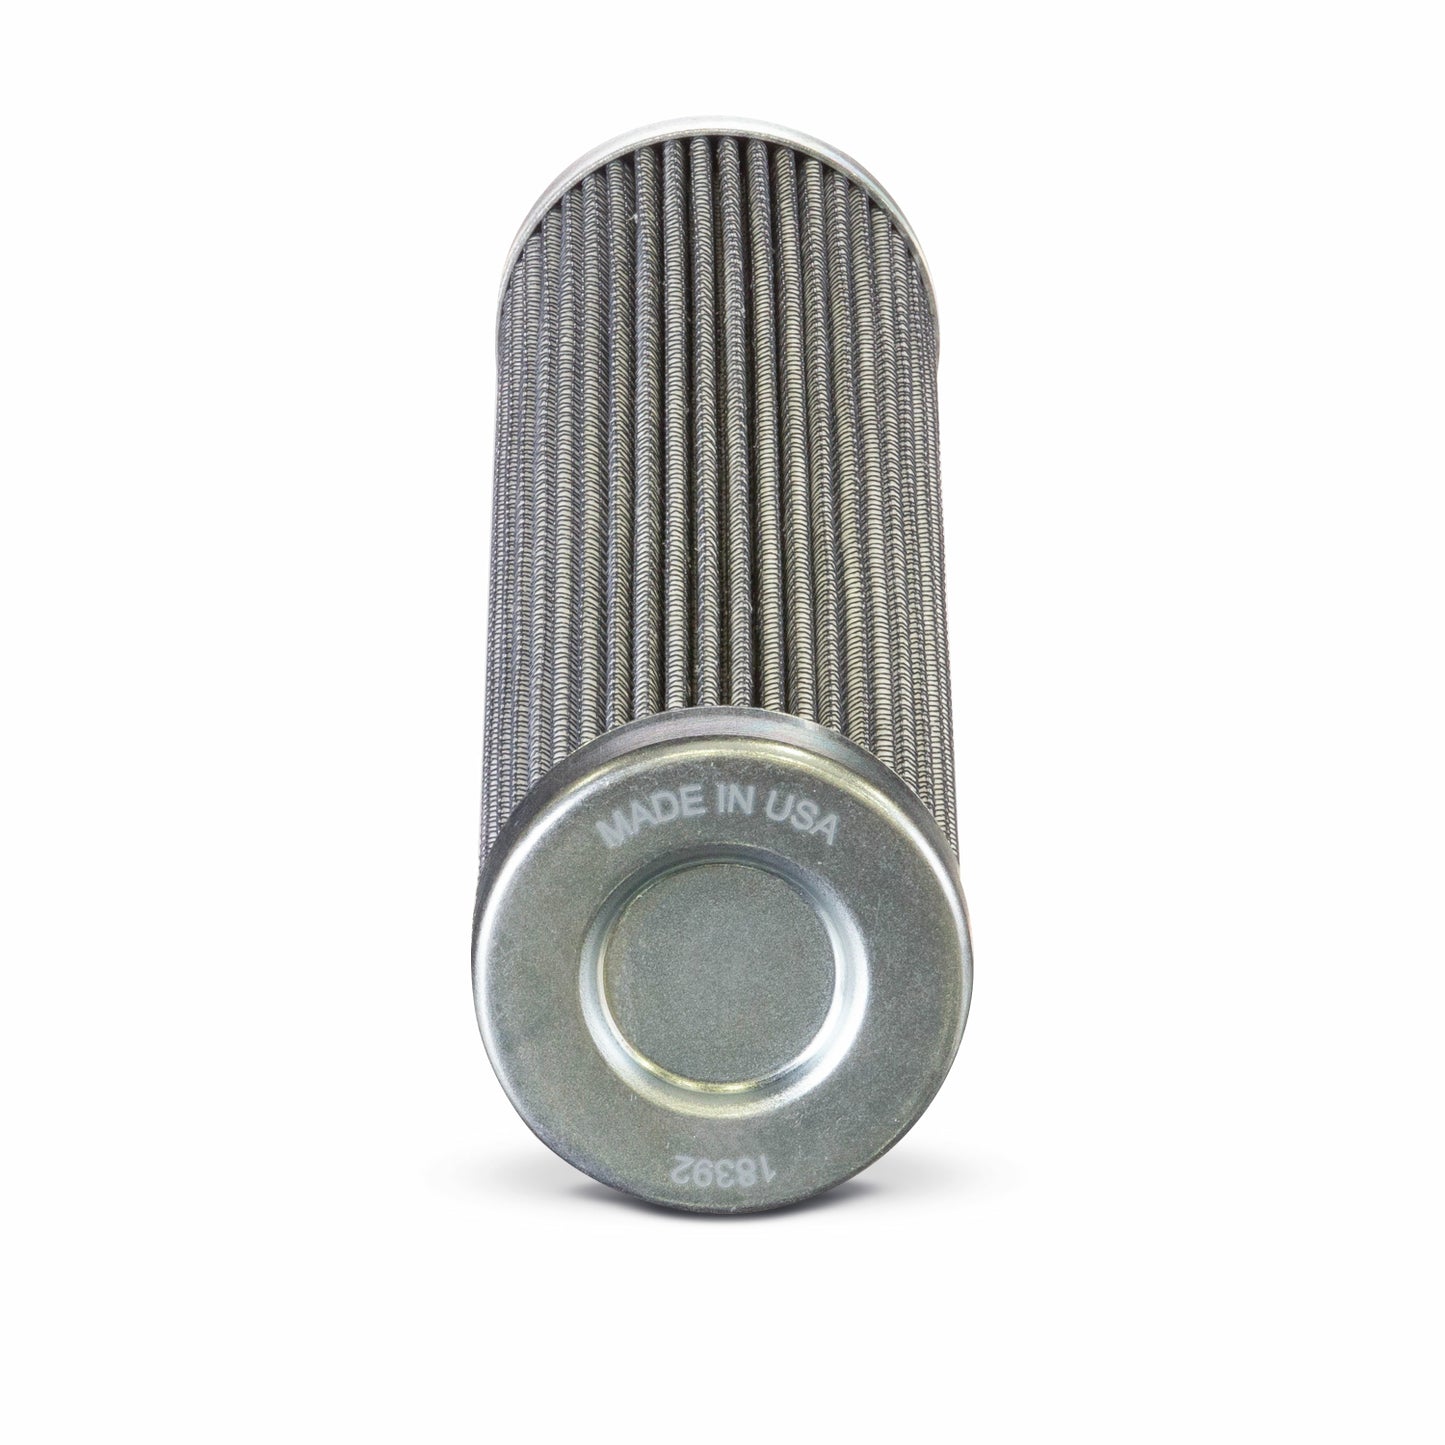 Cartridge Filter Element SF9020-8-6UMV 6 Micron Microglass